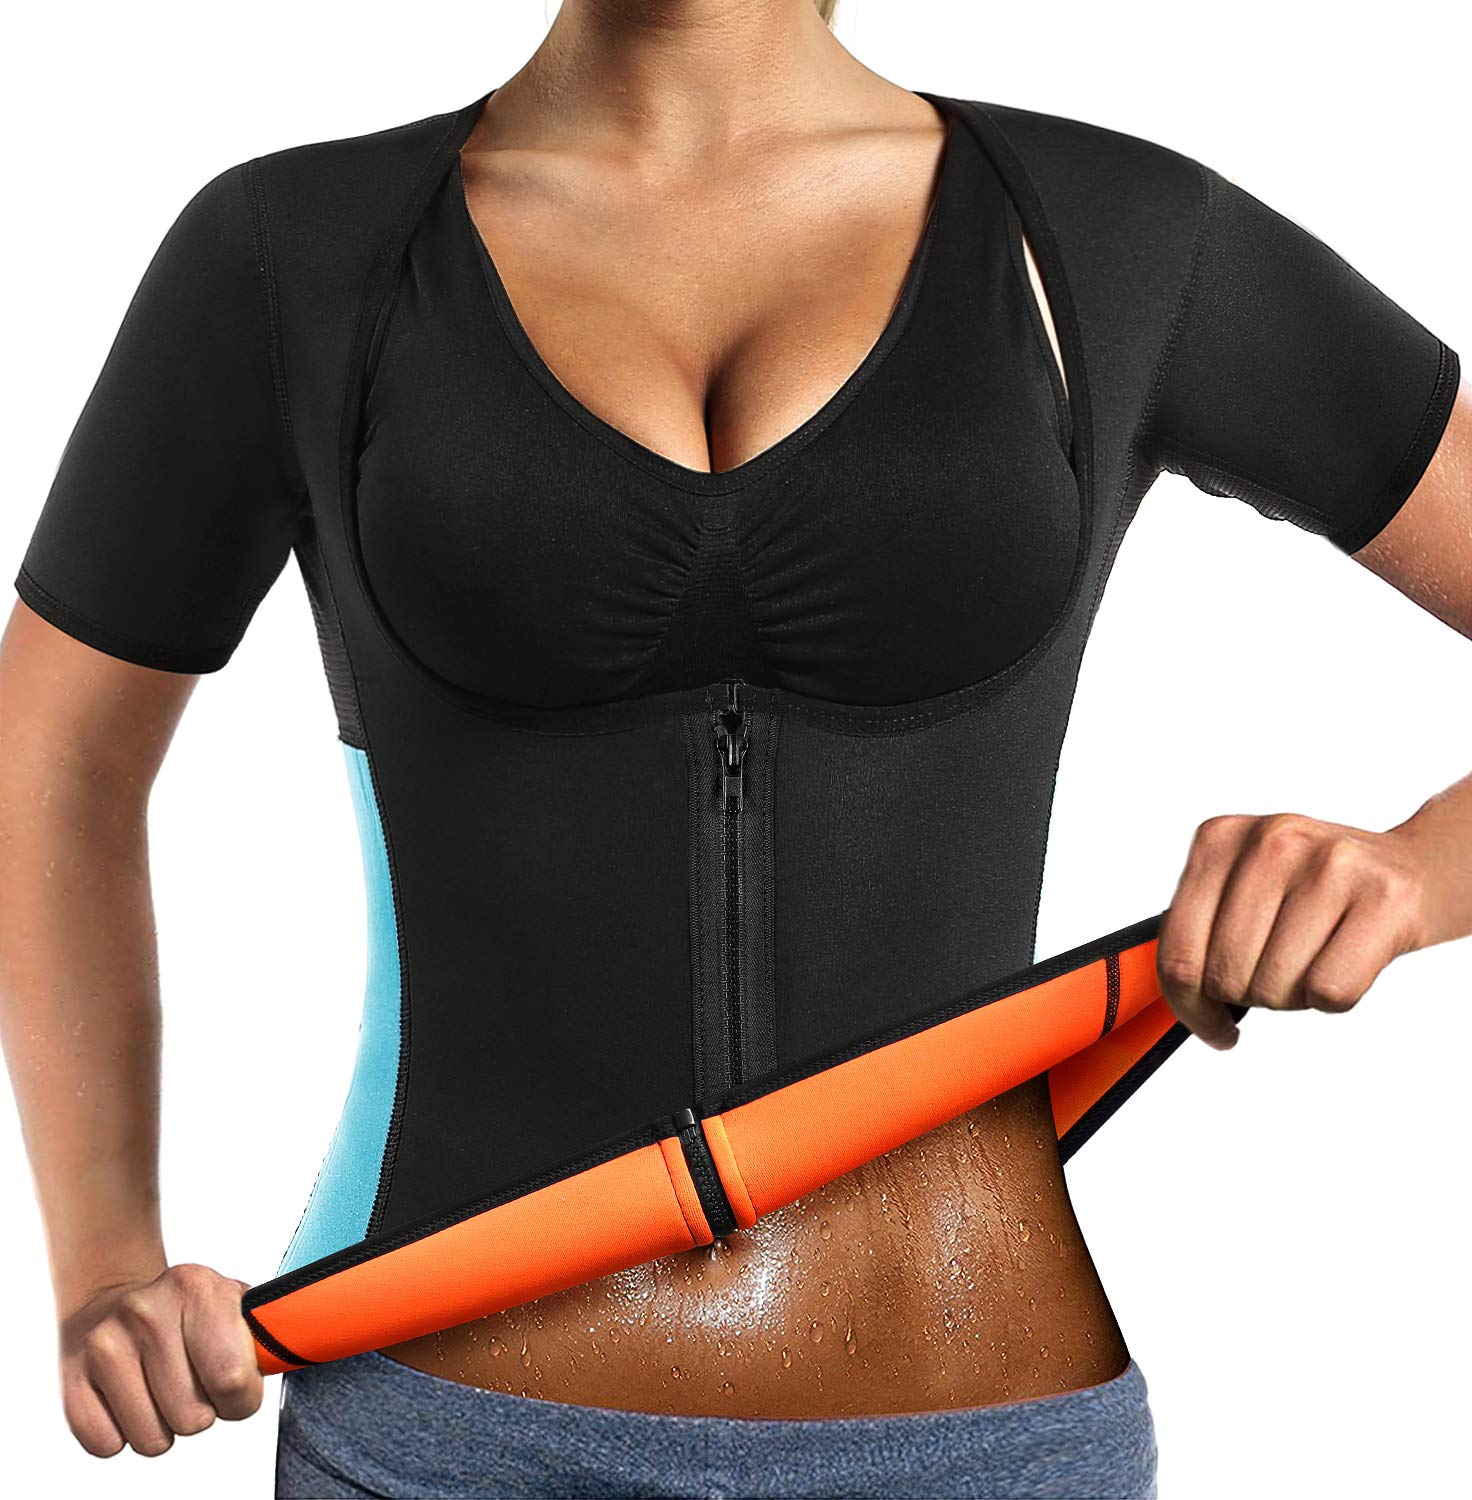 Sauna Sweat Vest Women Weight Loss Neoprene Slimming Hot Body Waist Trainer with Zipper